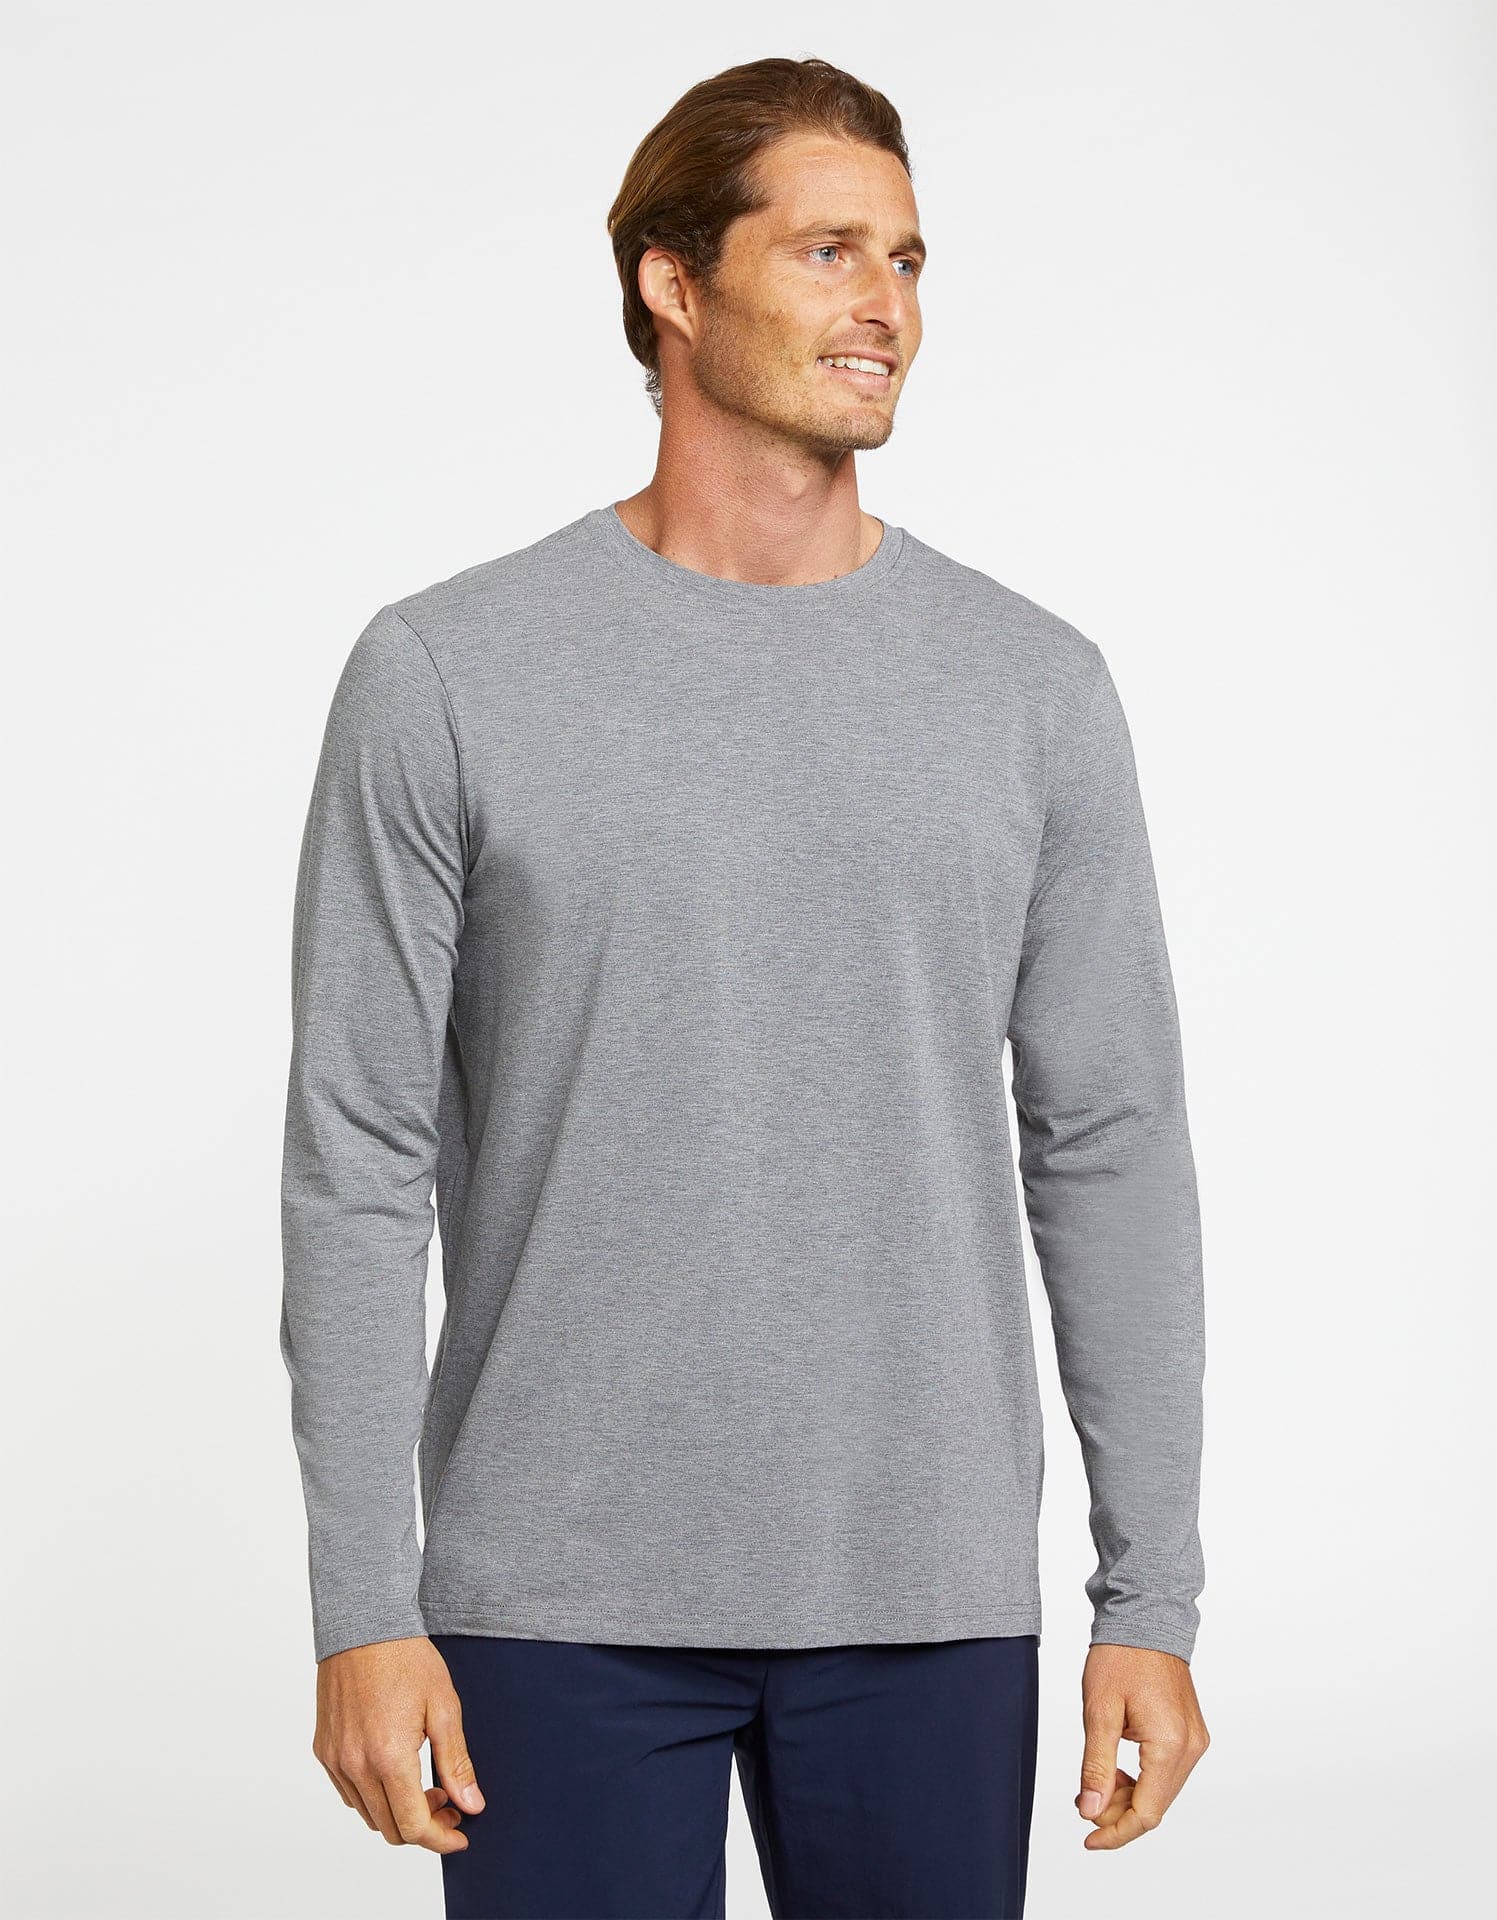 Sun Protective Long Sleeve T-Shirt for Men | UPF 50+ Sun Protection Dark Grey Marle